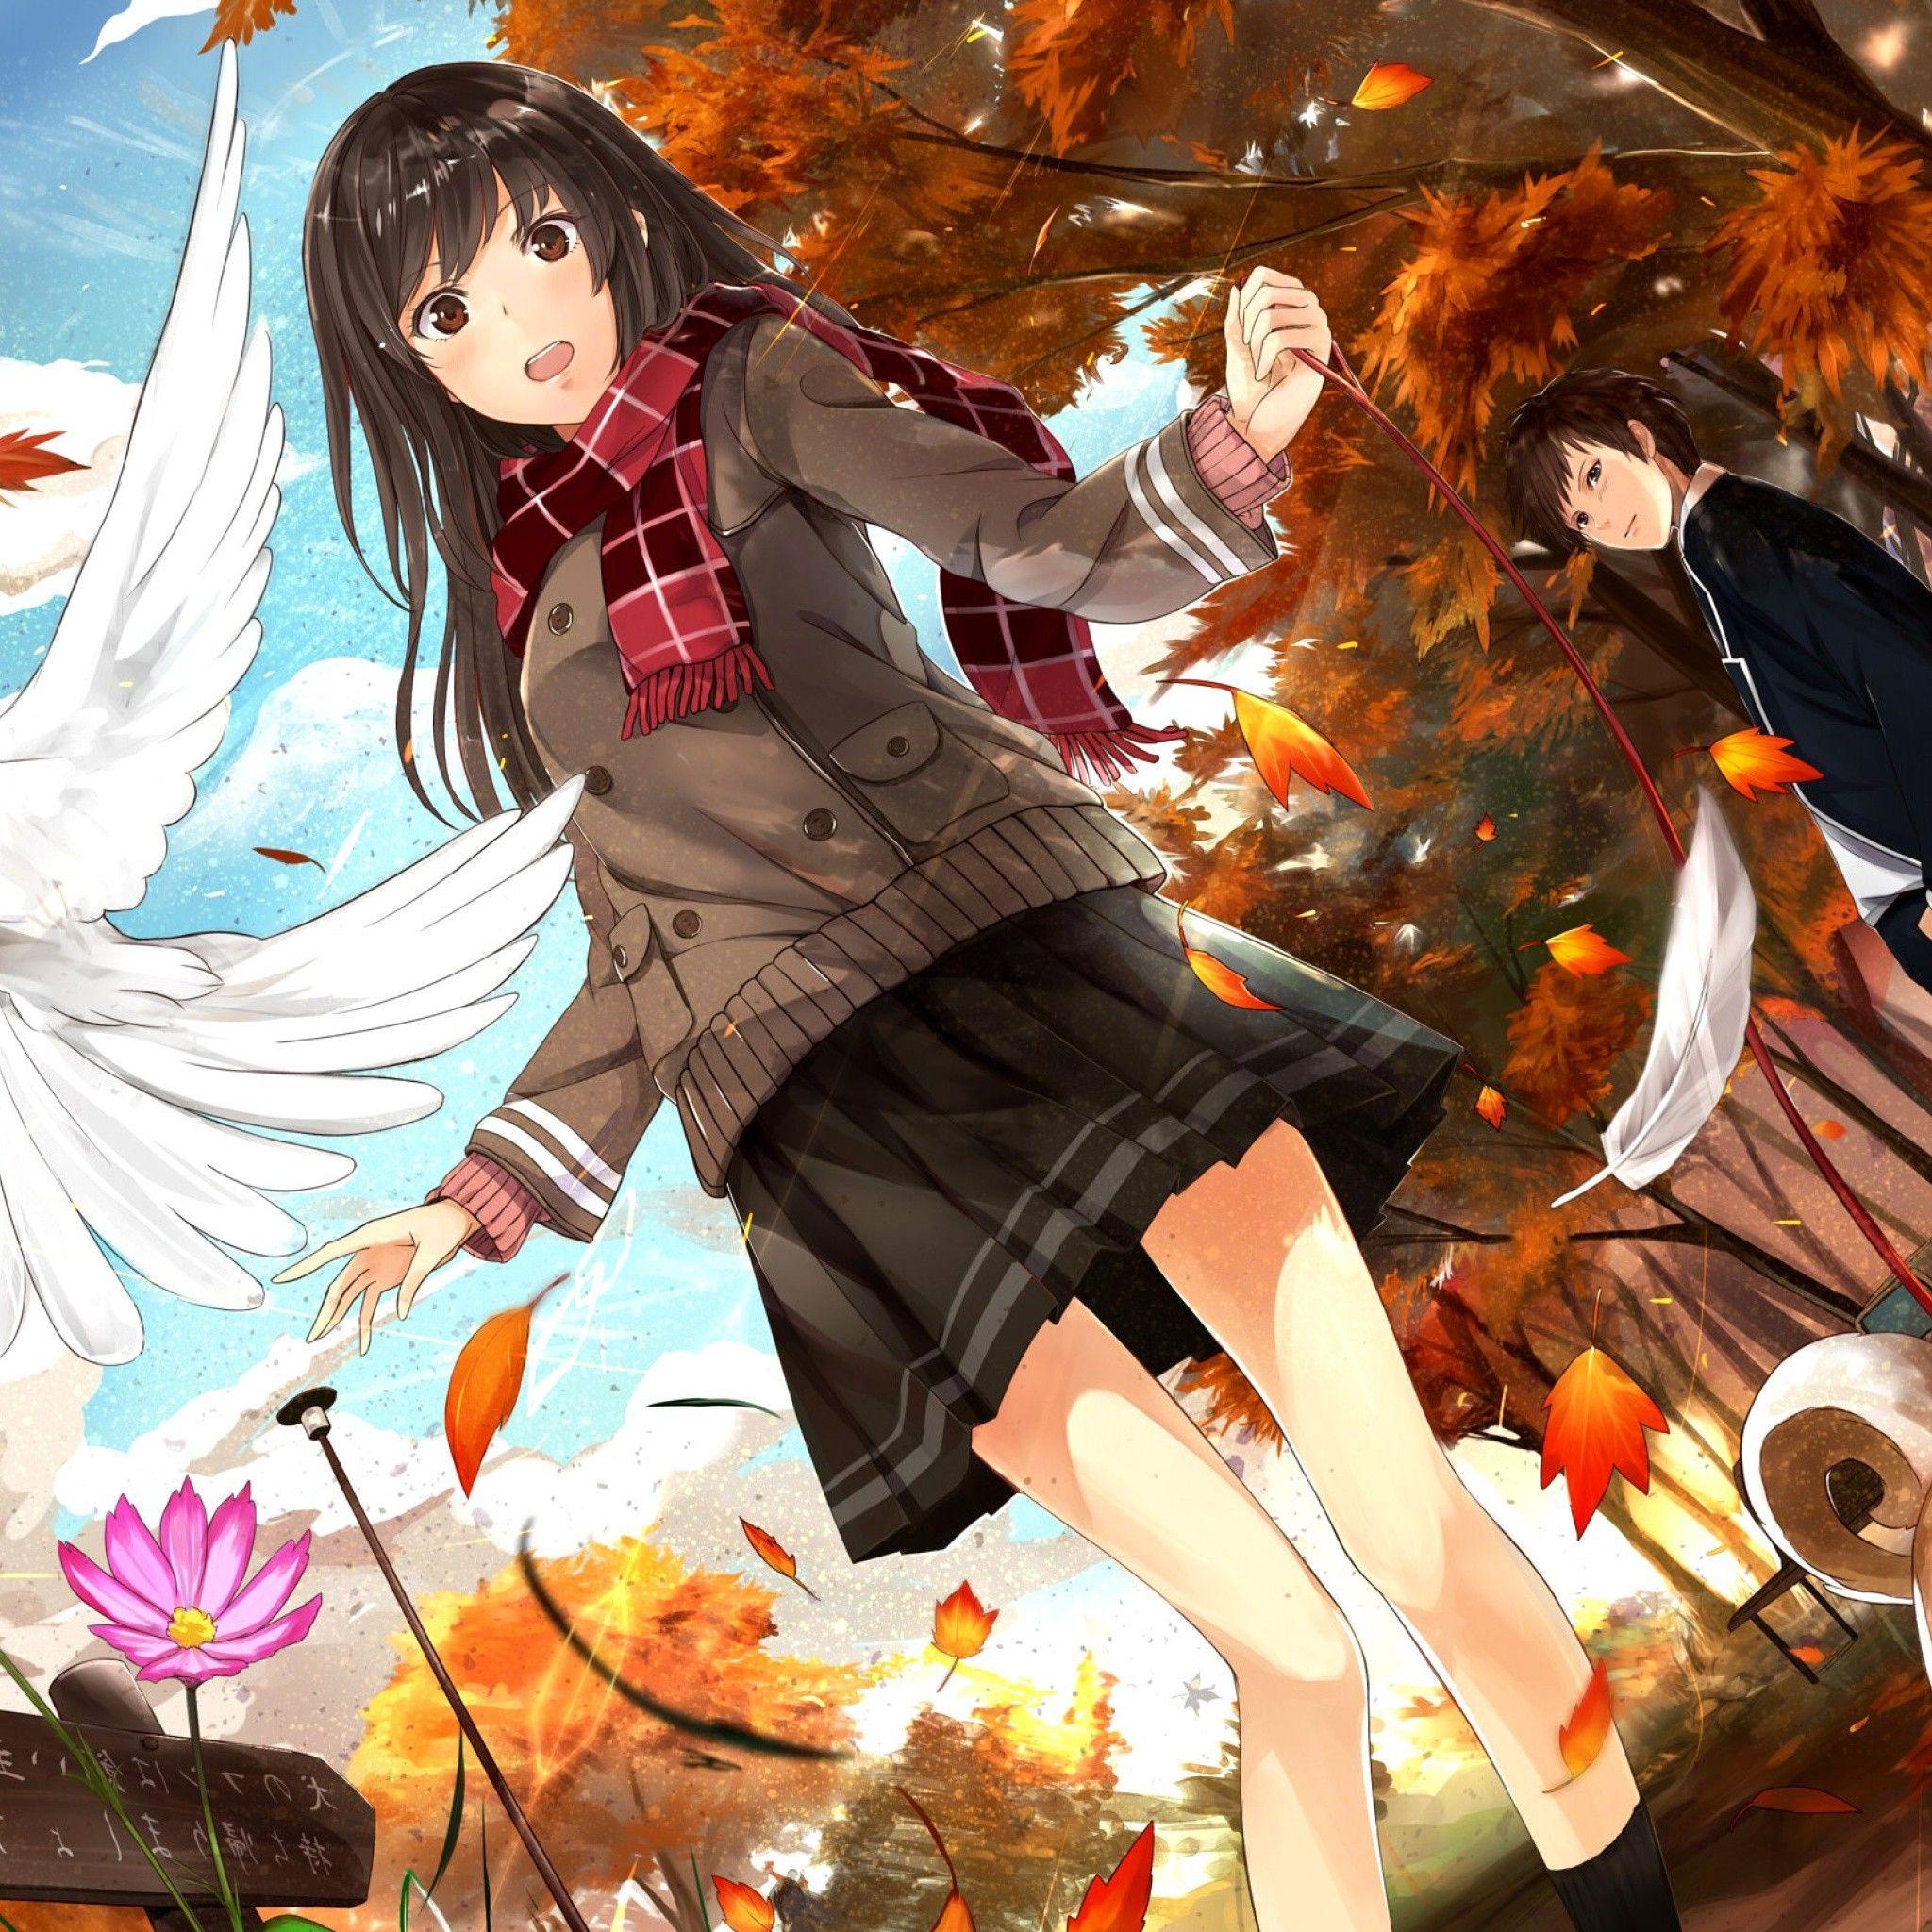 Kazabana Fuuka to see more Thanksgiving Anime wallpaper